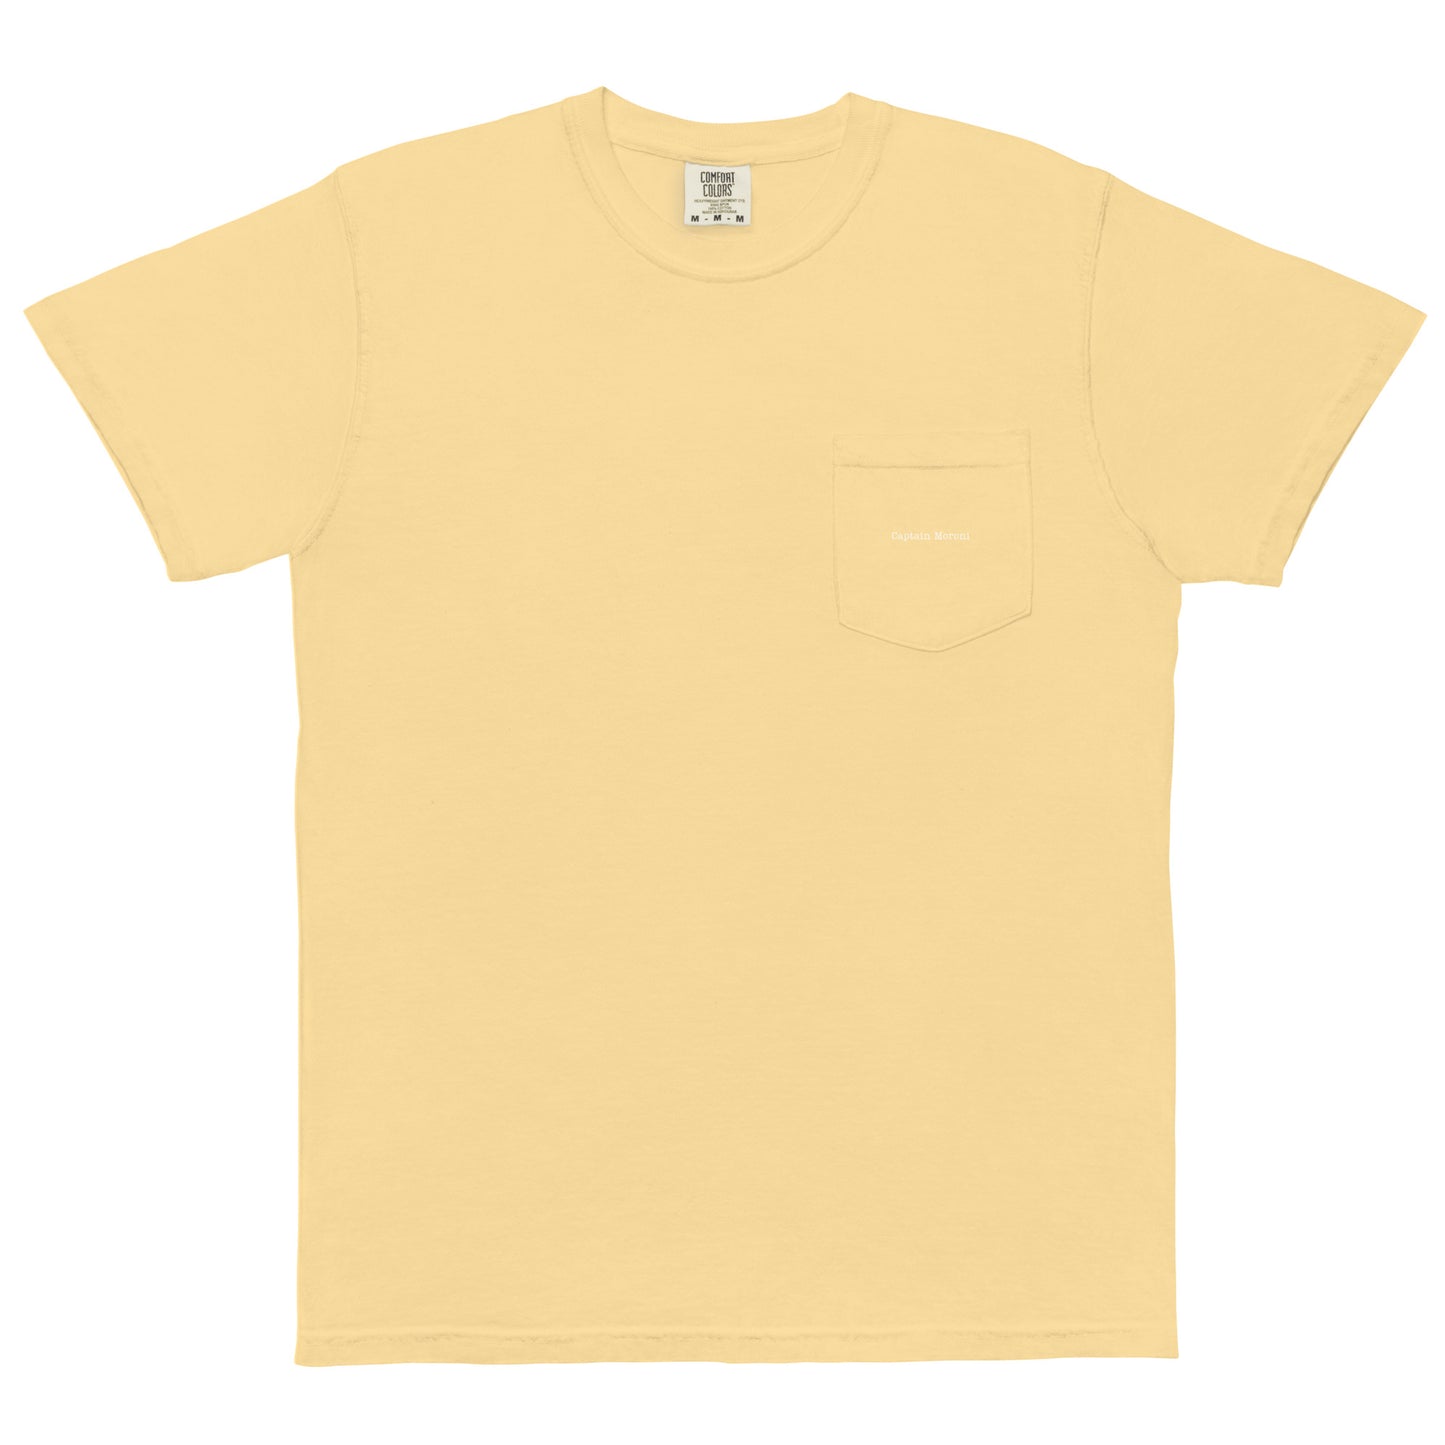 Title Of Liberty Unisex garment-dyed pocket t-shirt